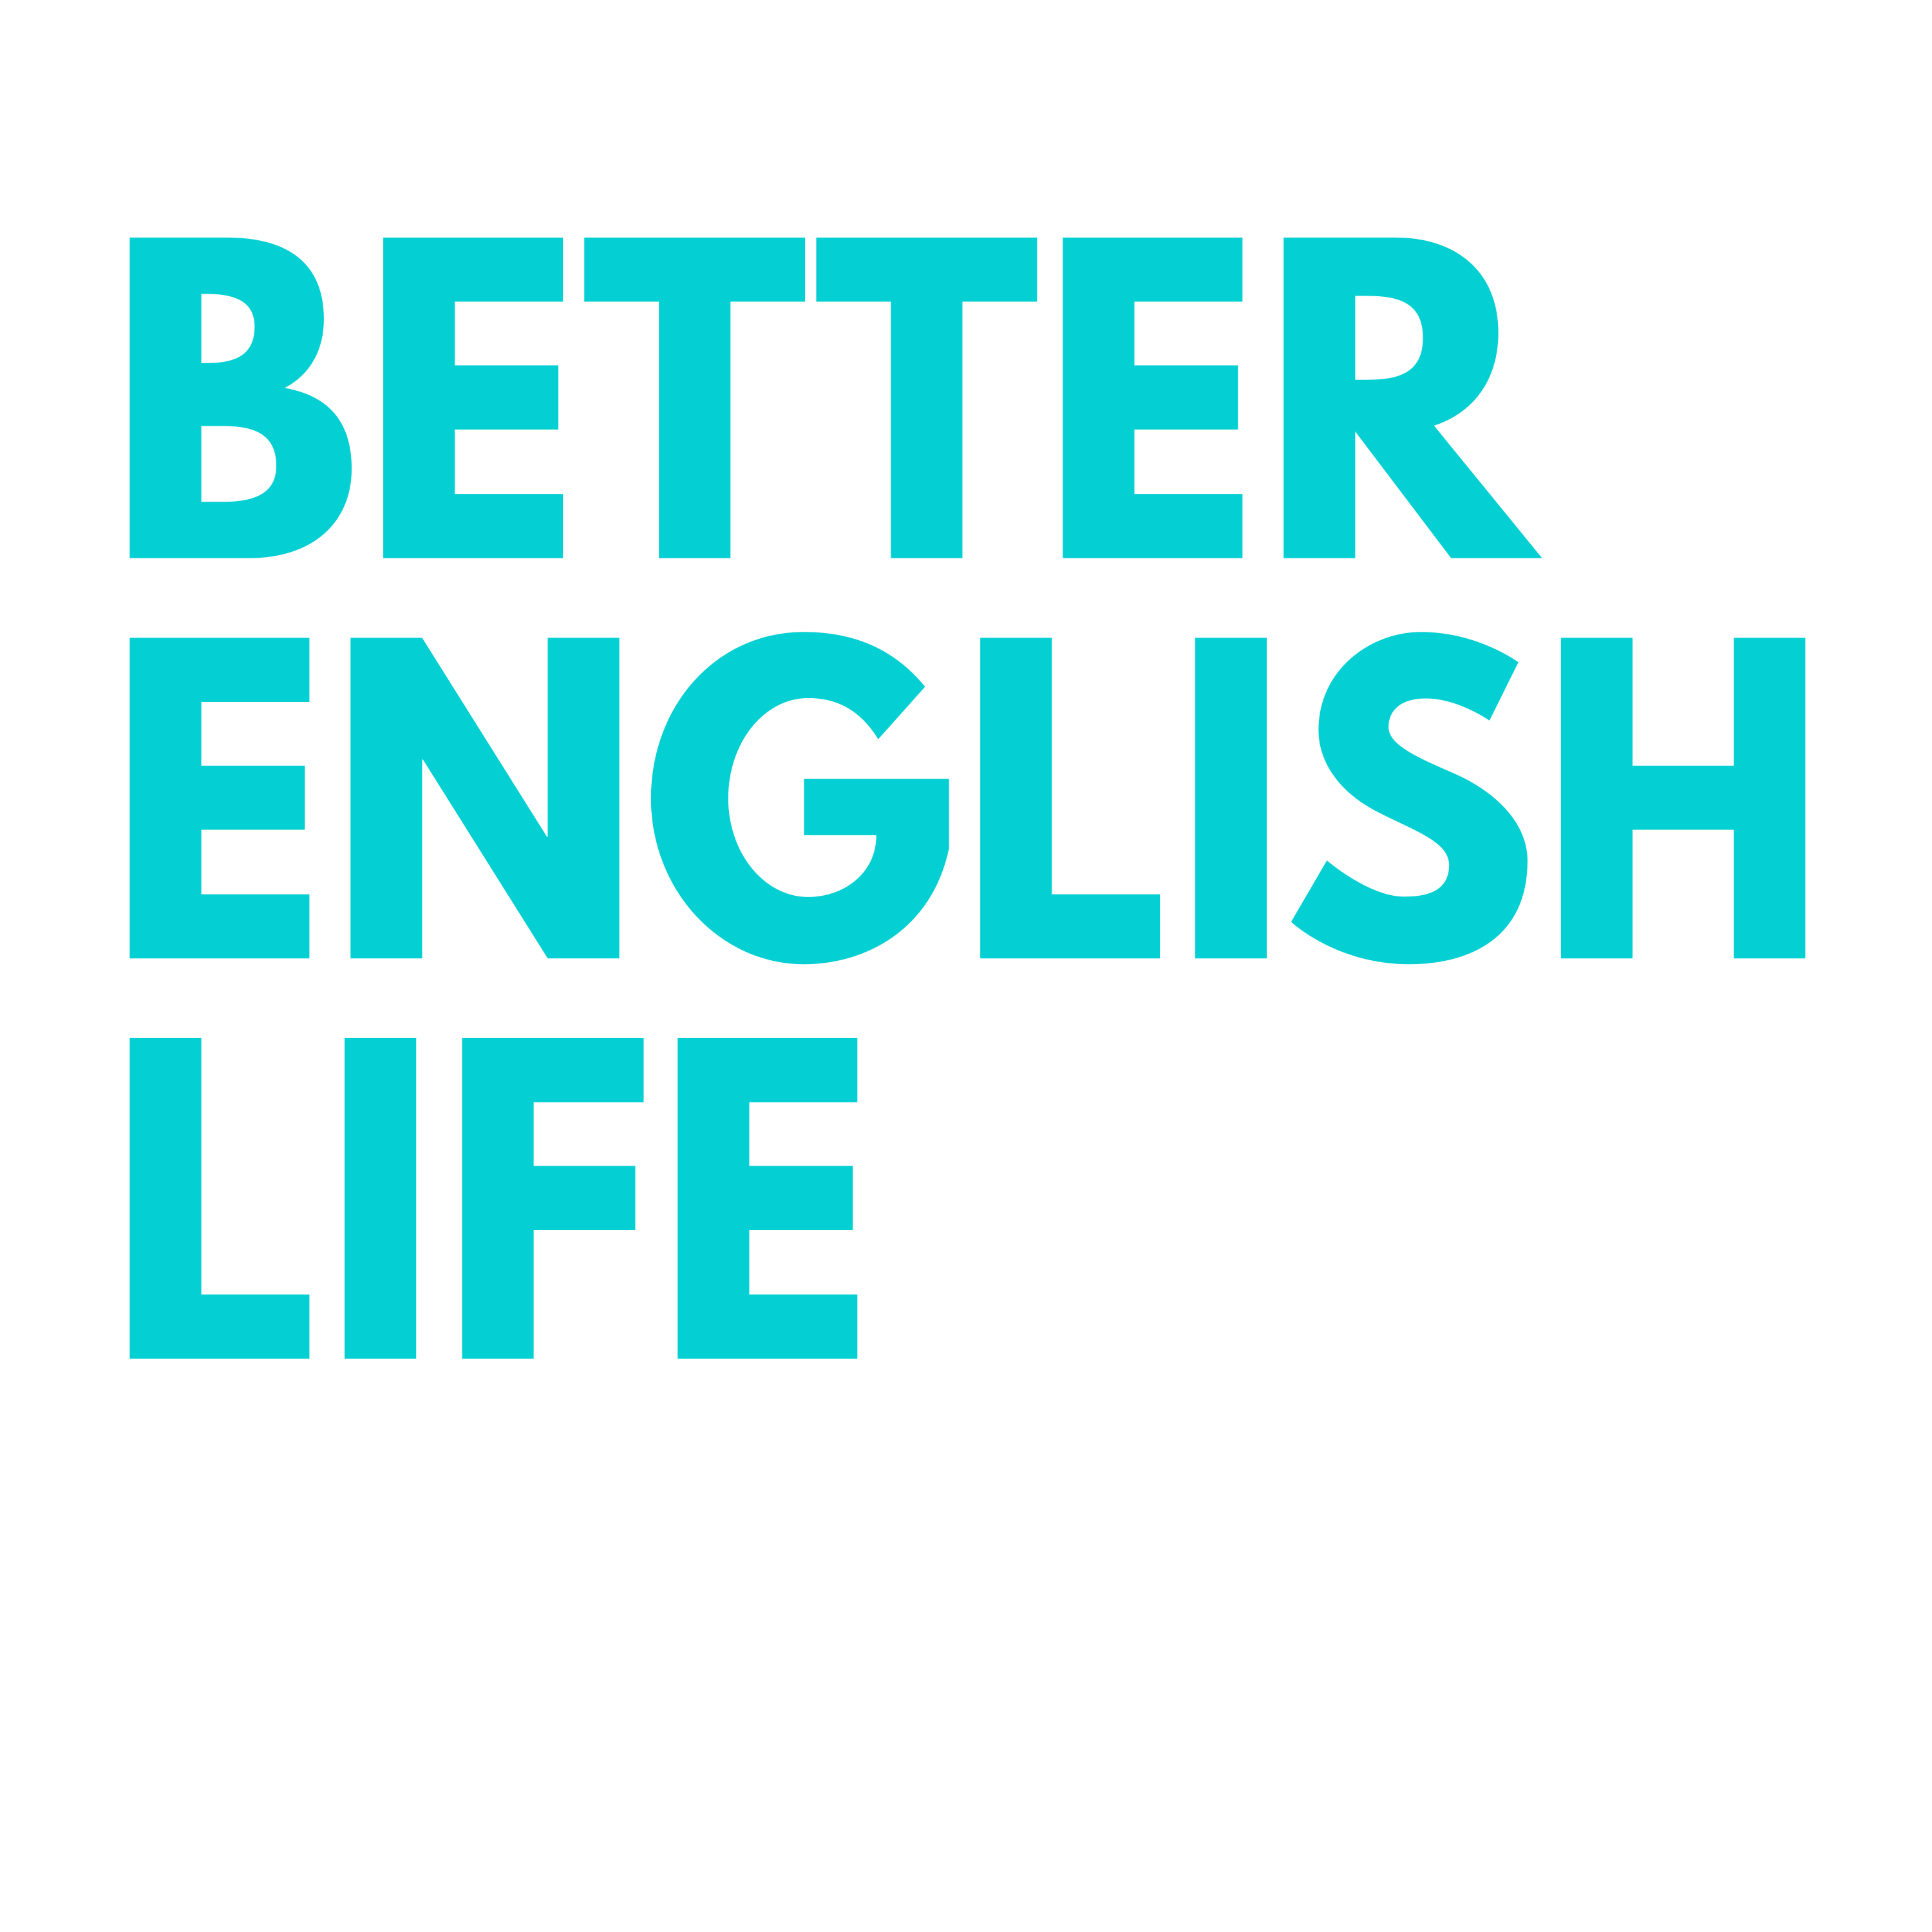 Her english get better. Better English. English Life. Better Life. Инглиш ФО лайф.